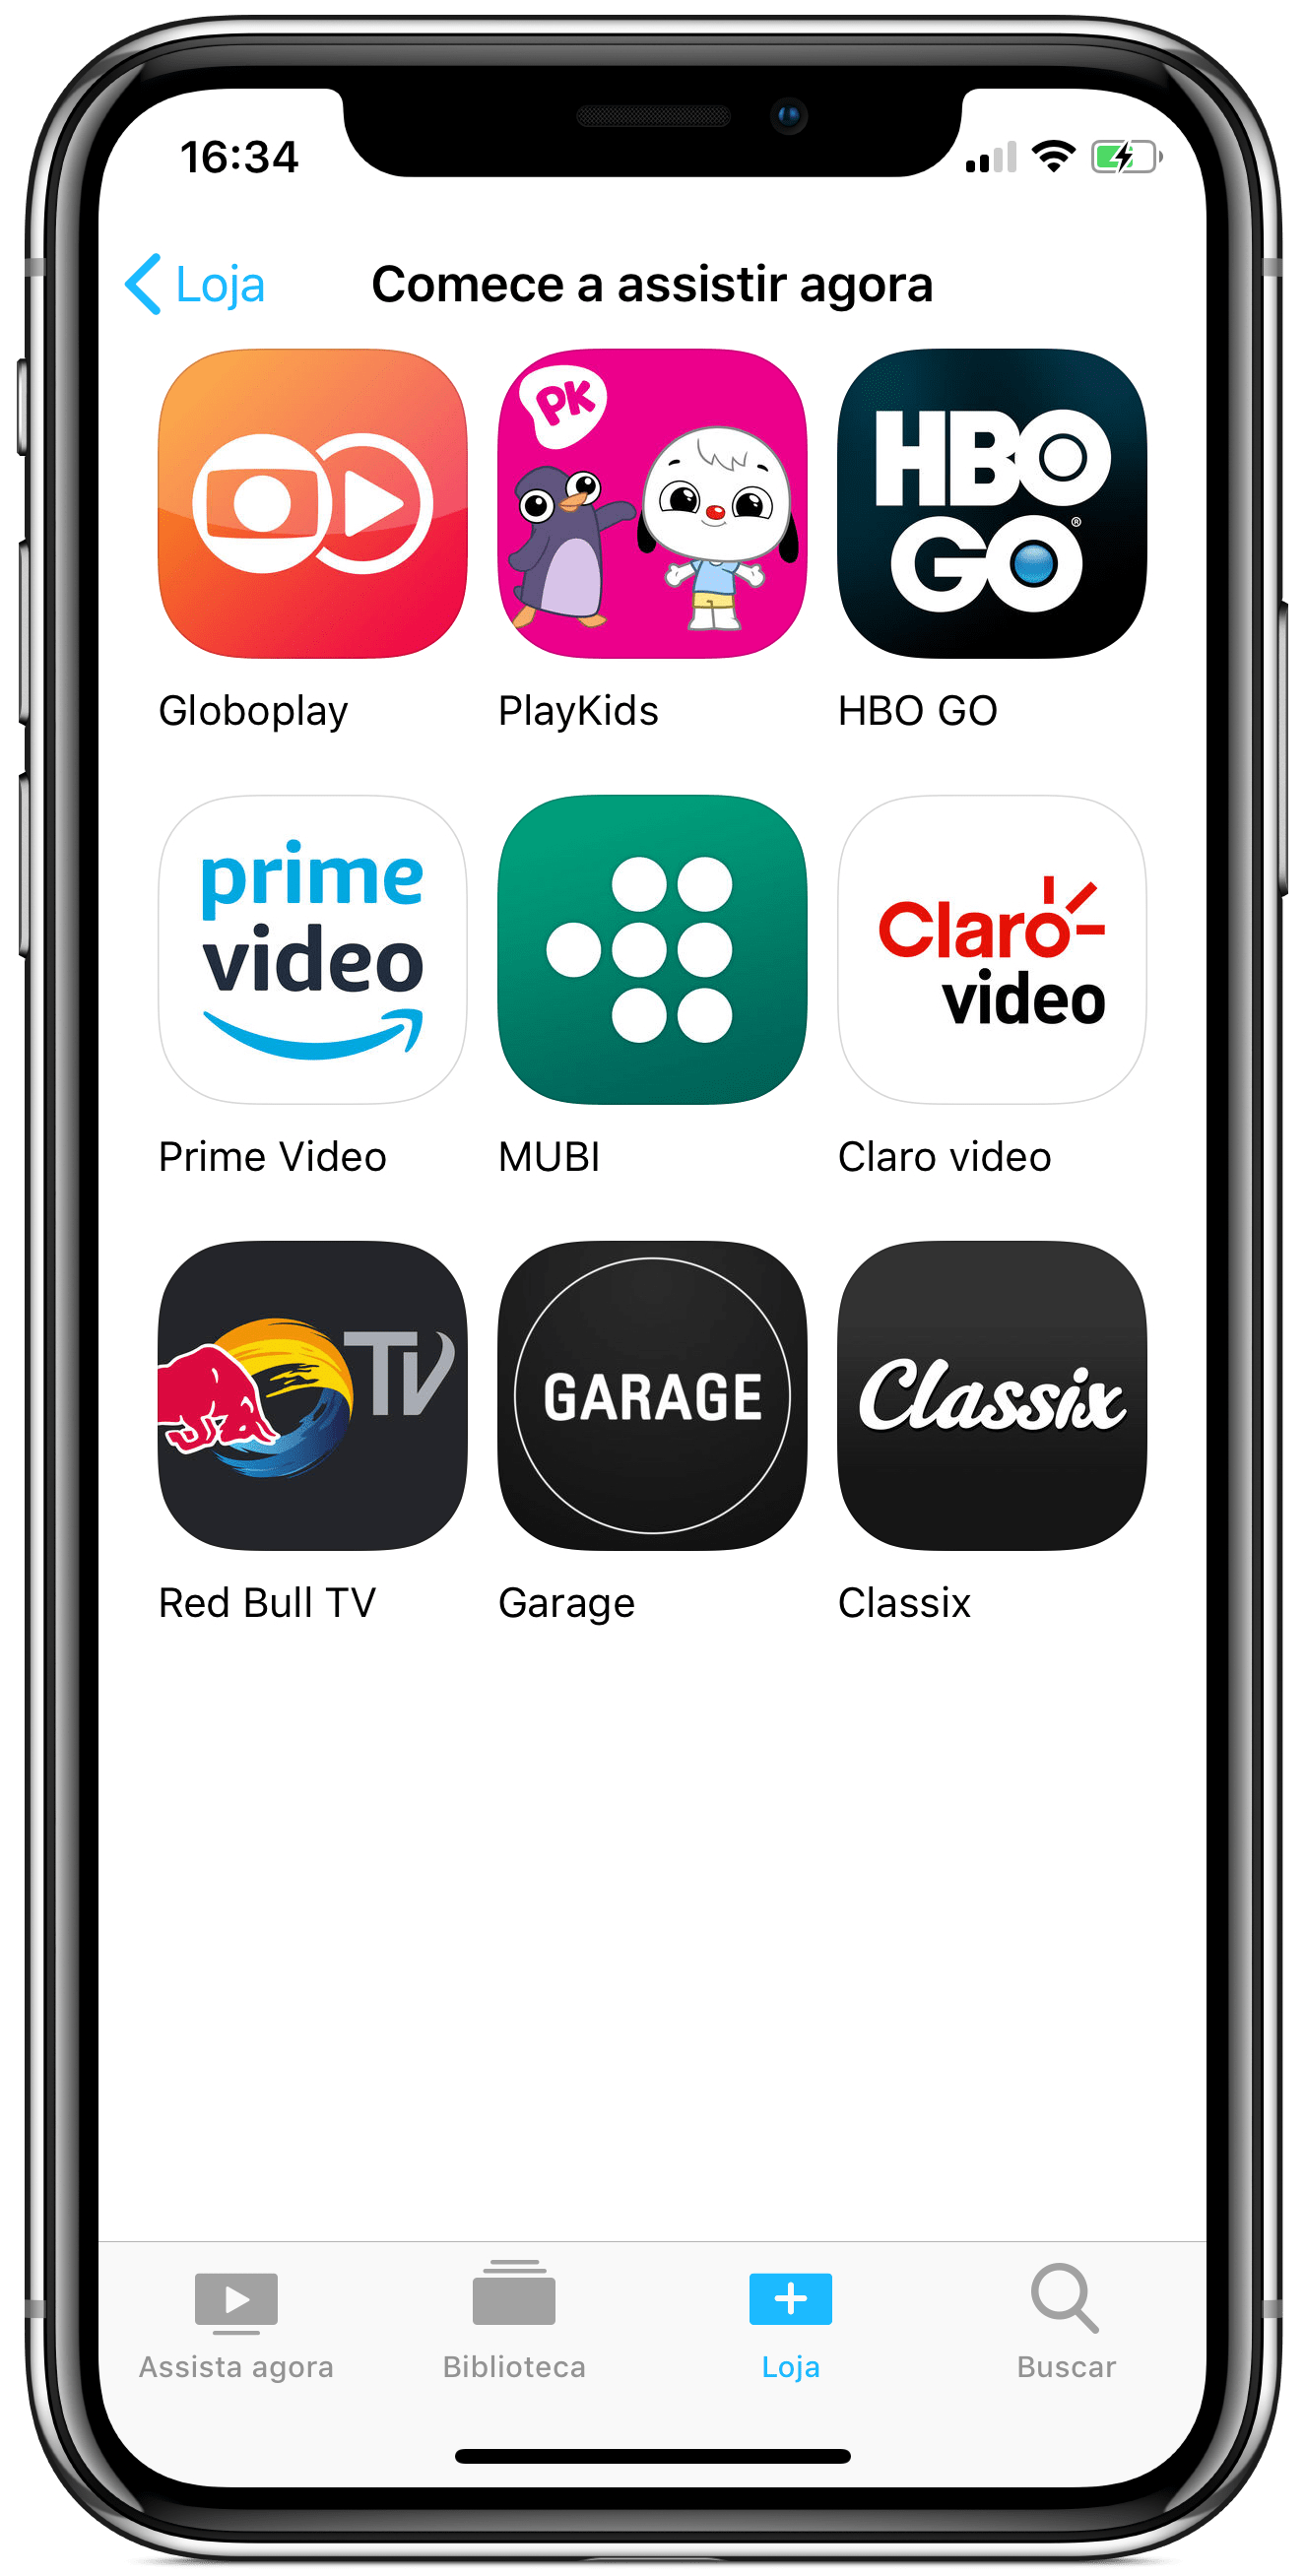 Classix app within the TV app